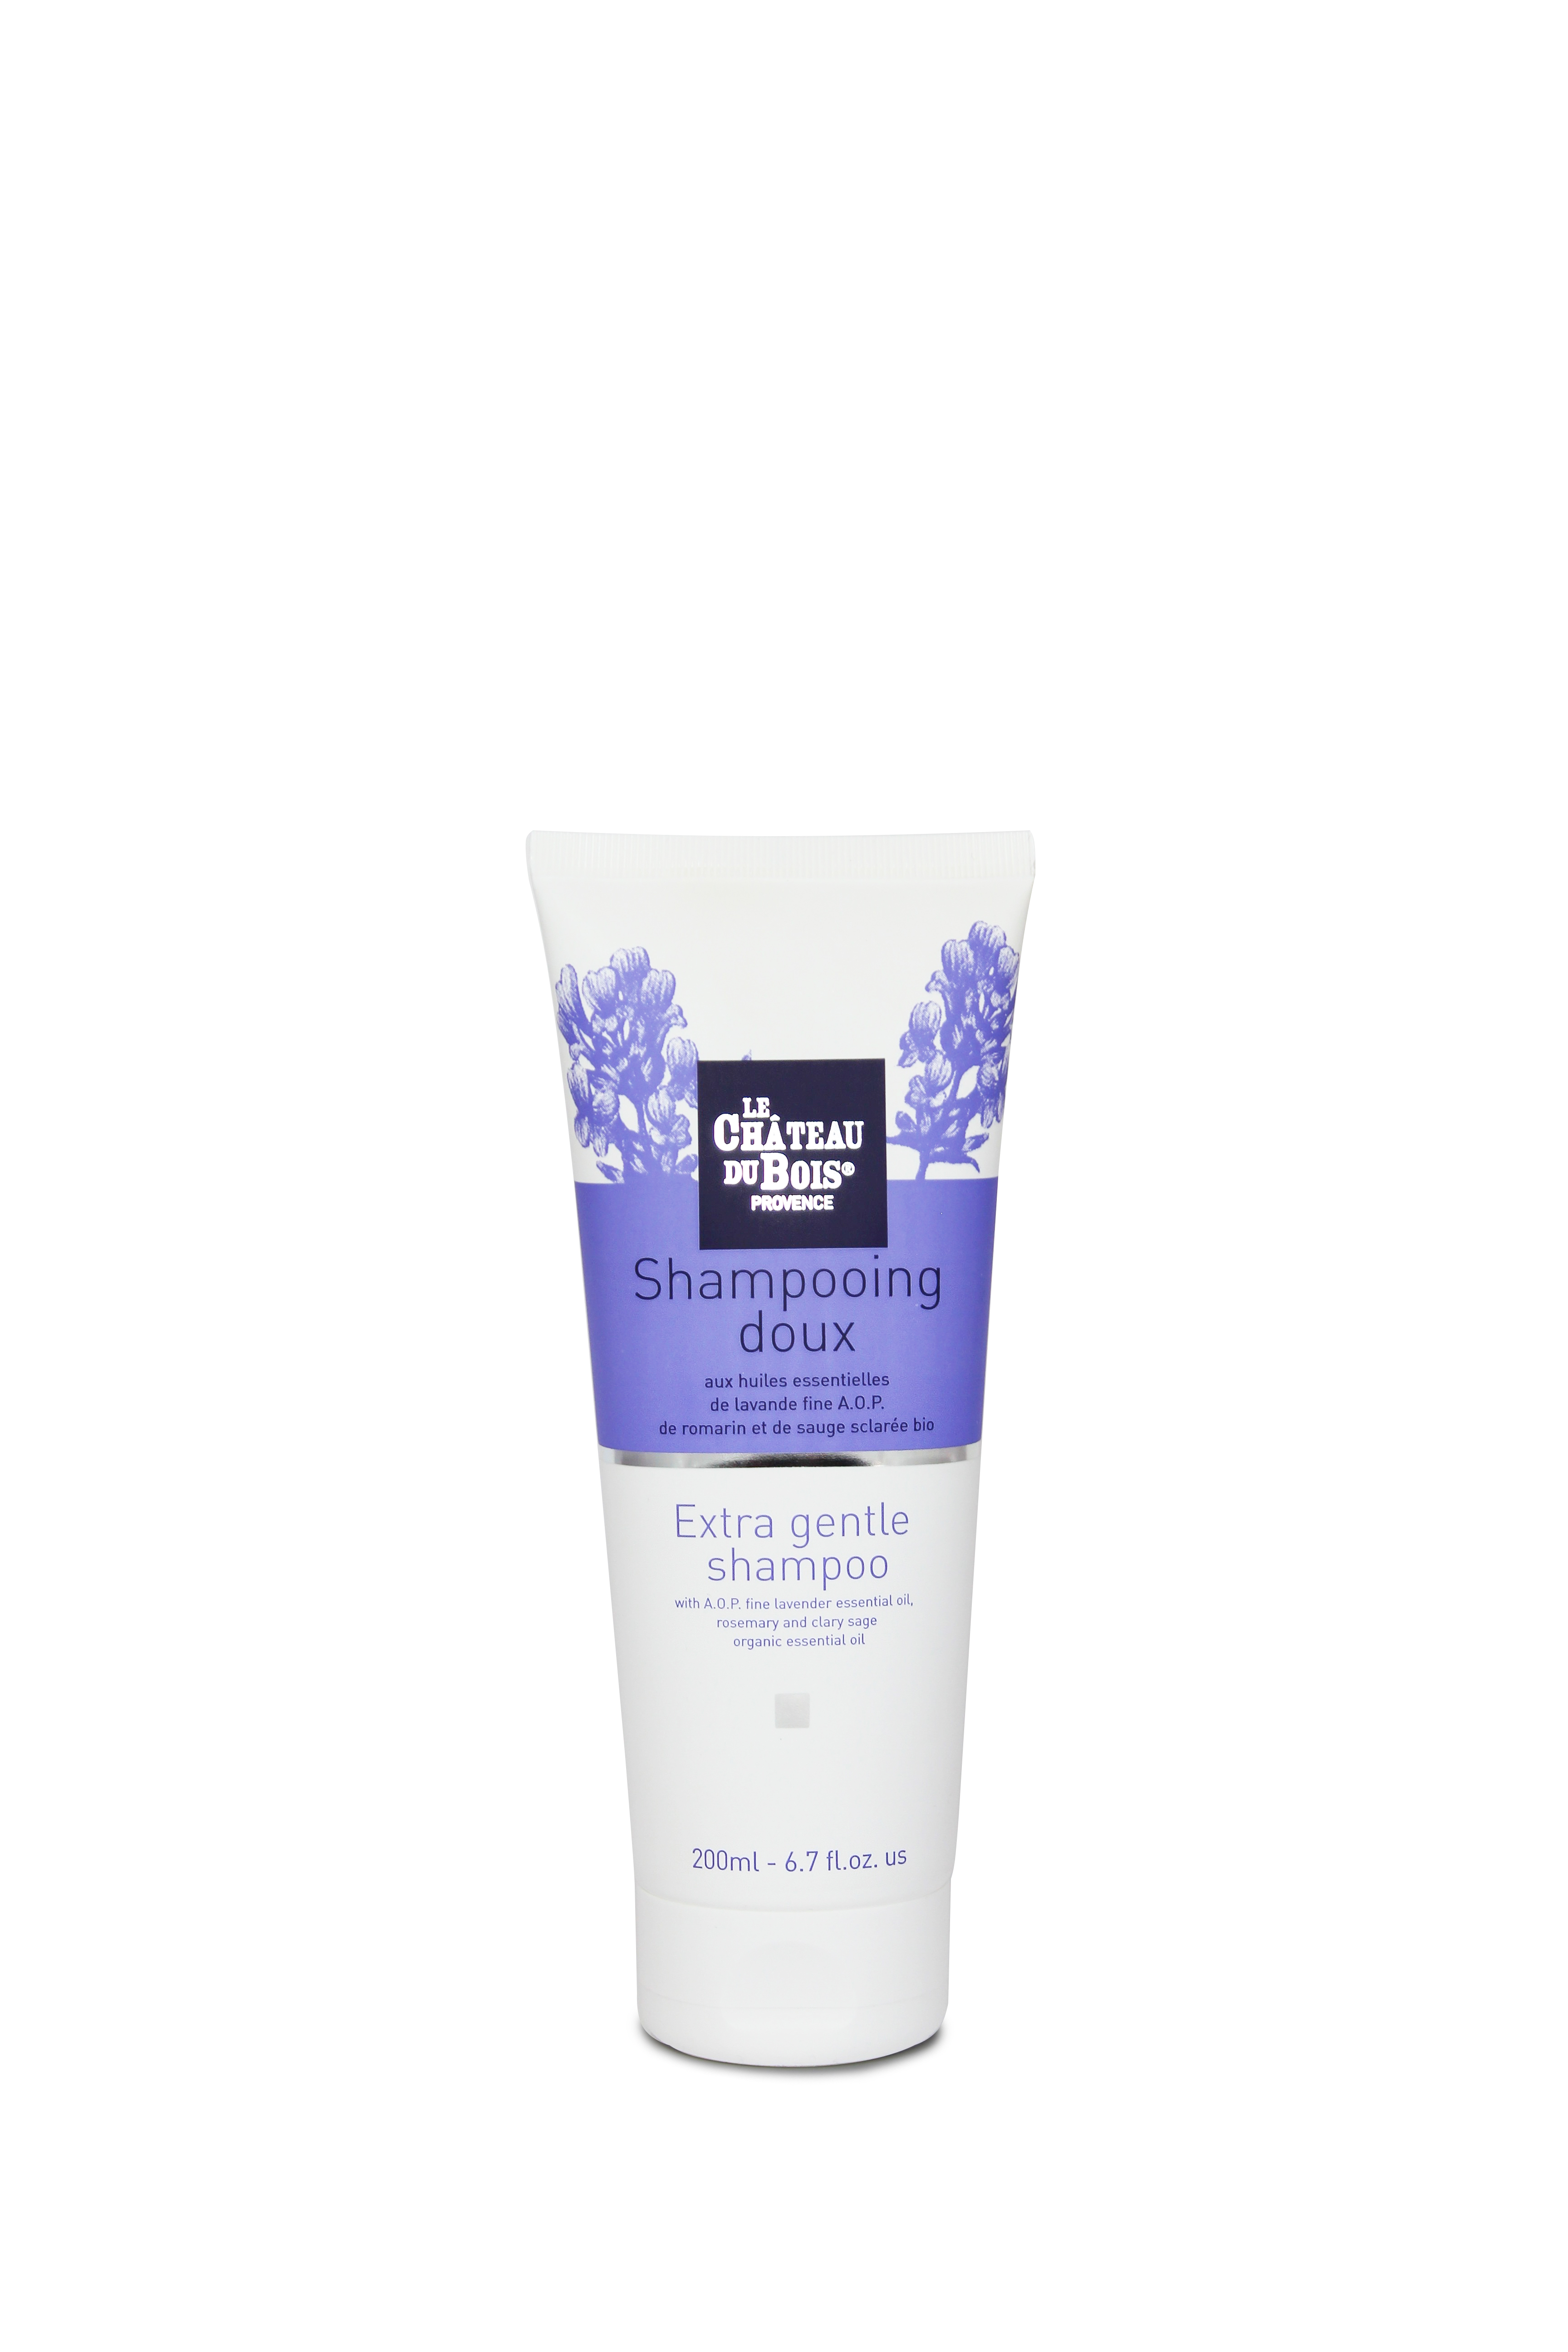 Extra gentle lavender shampoo ORGANIC 6.6 fl.oz.us